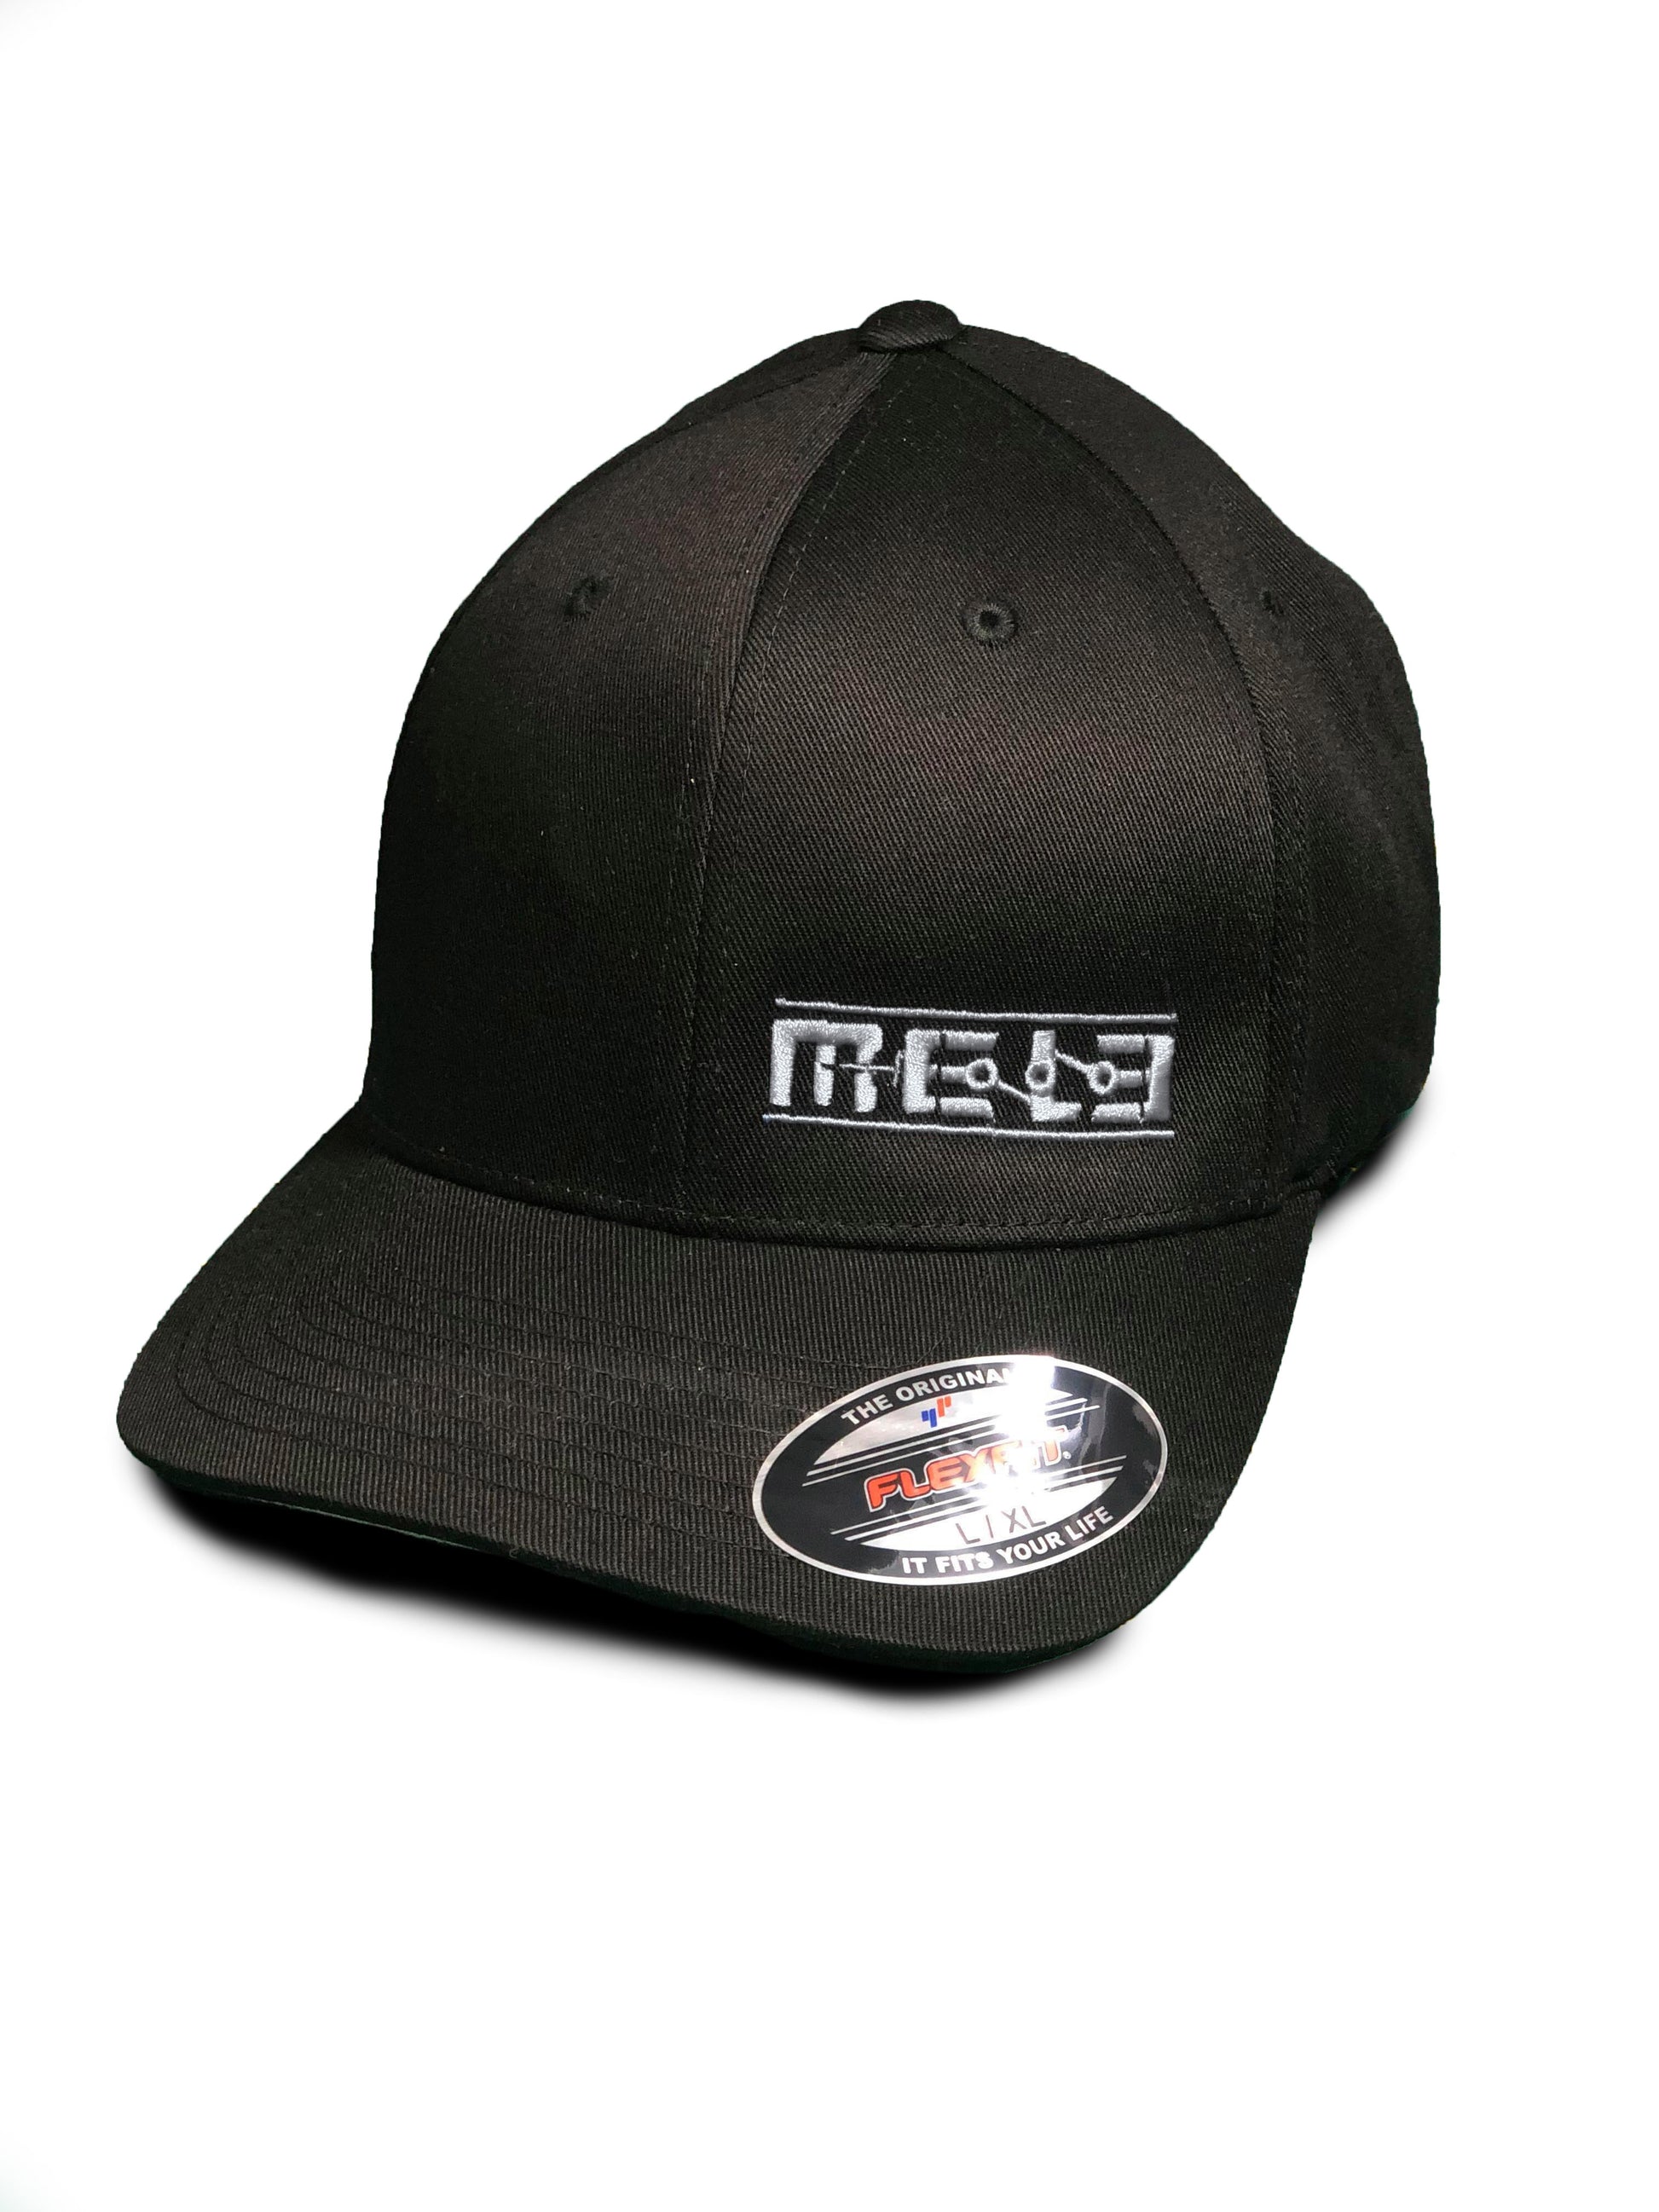 MeLe Flex Fit Hat White Mele Design Firm